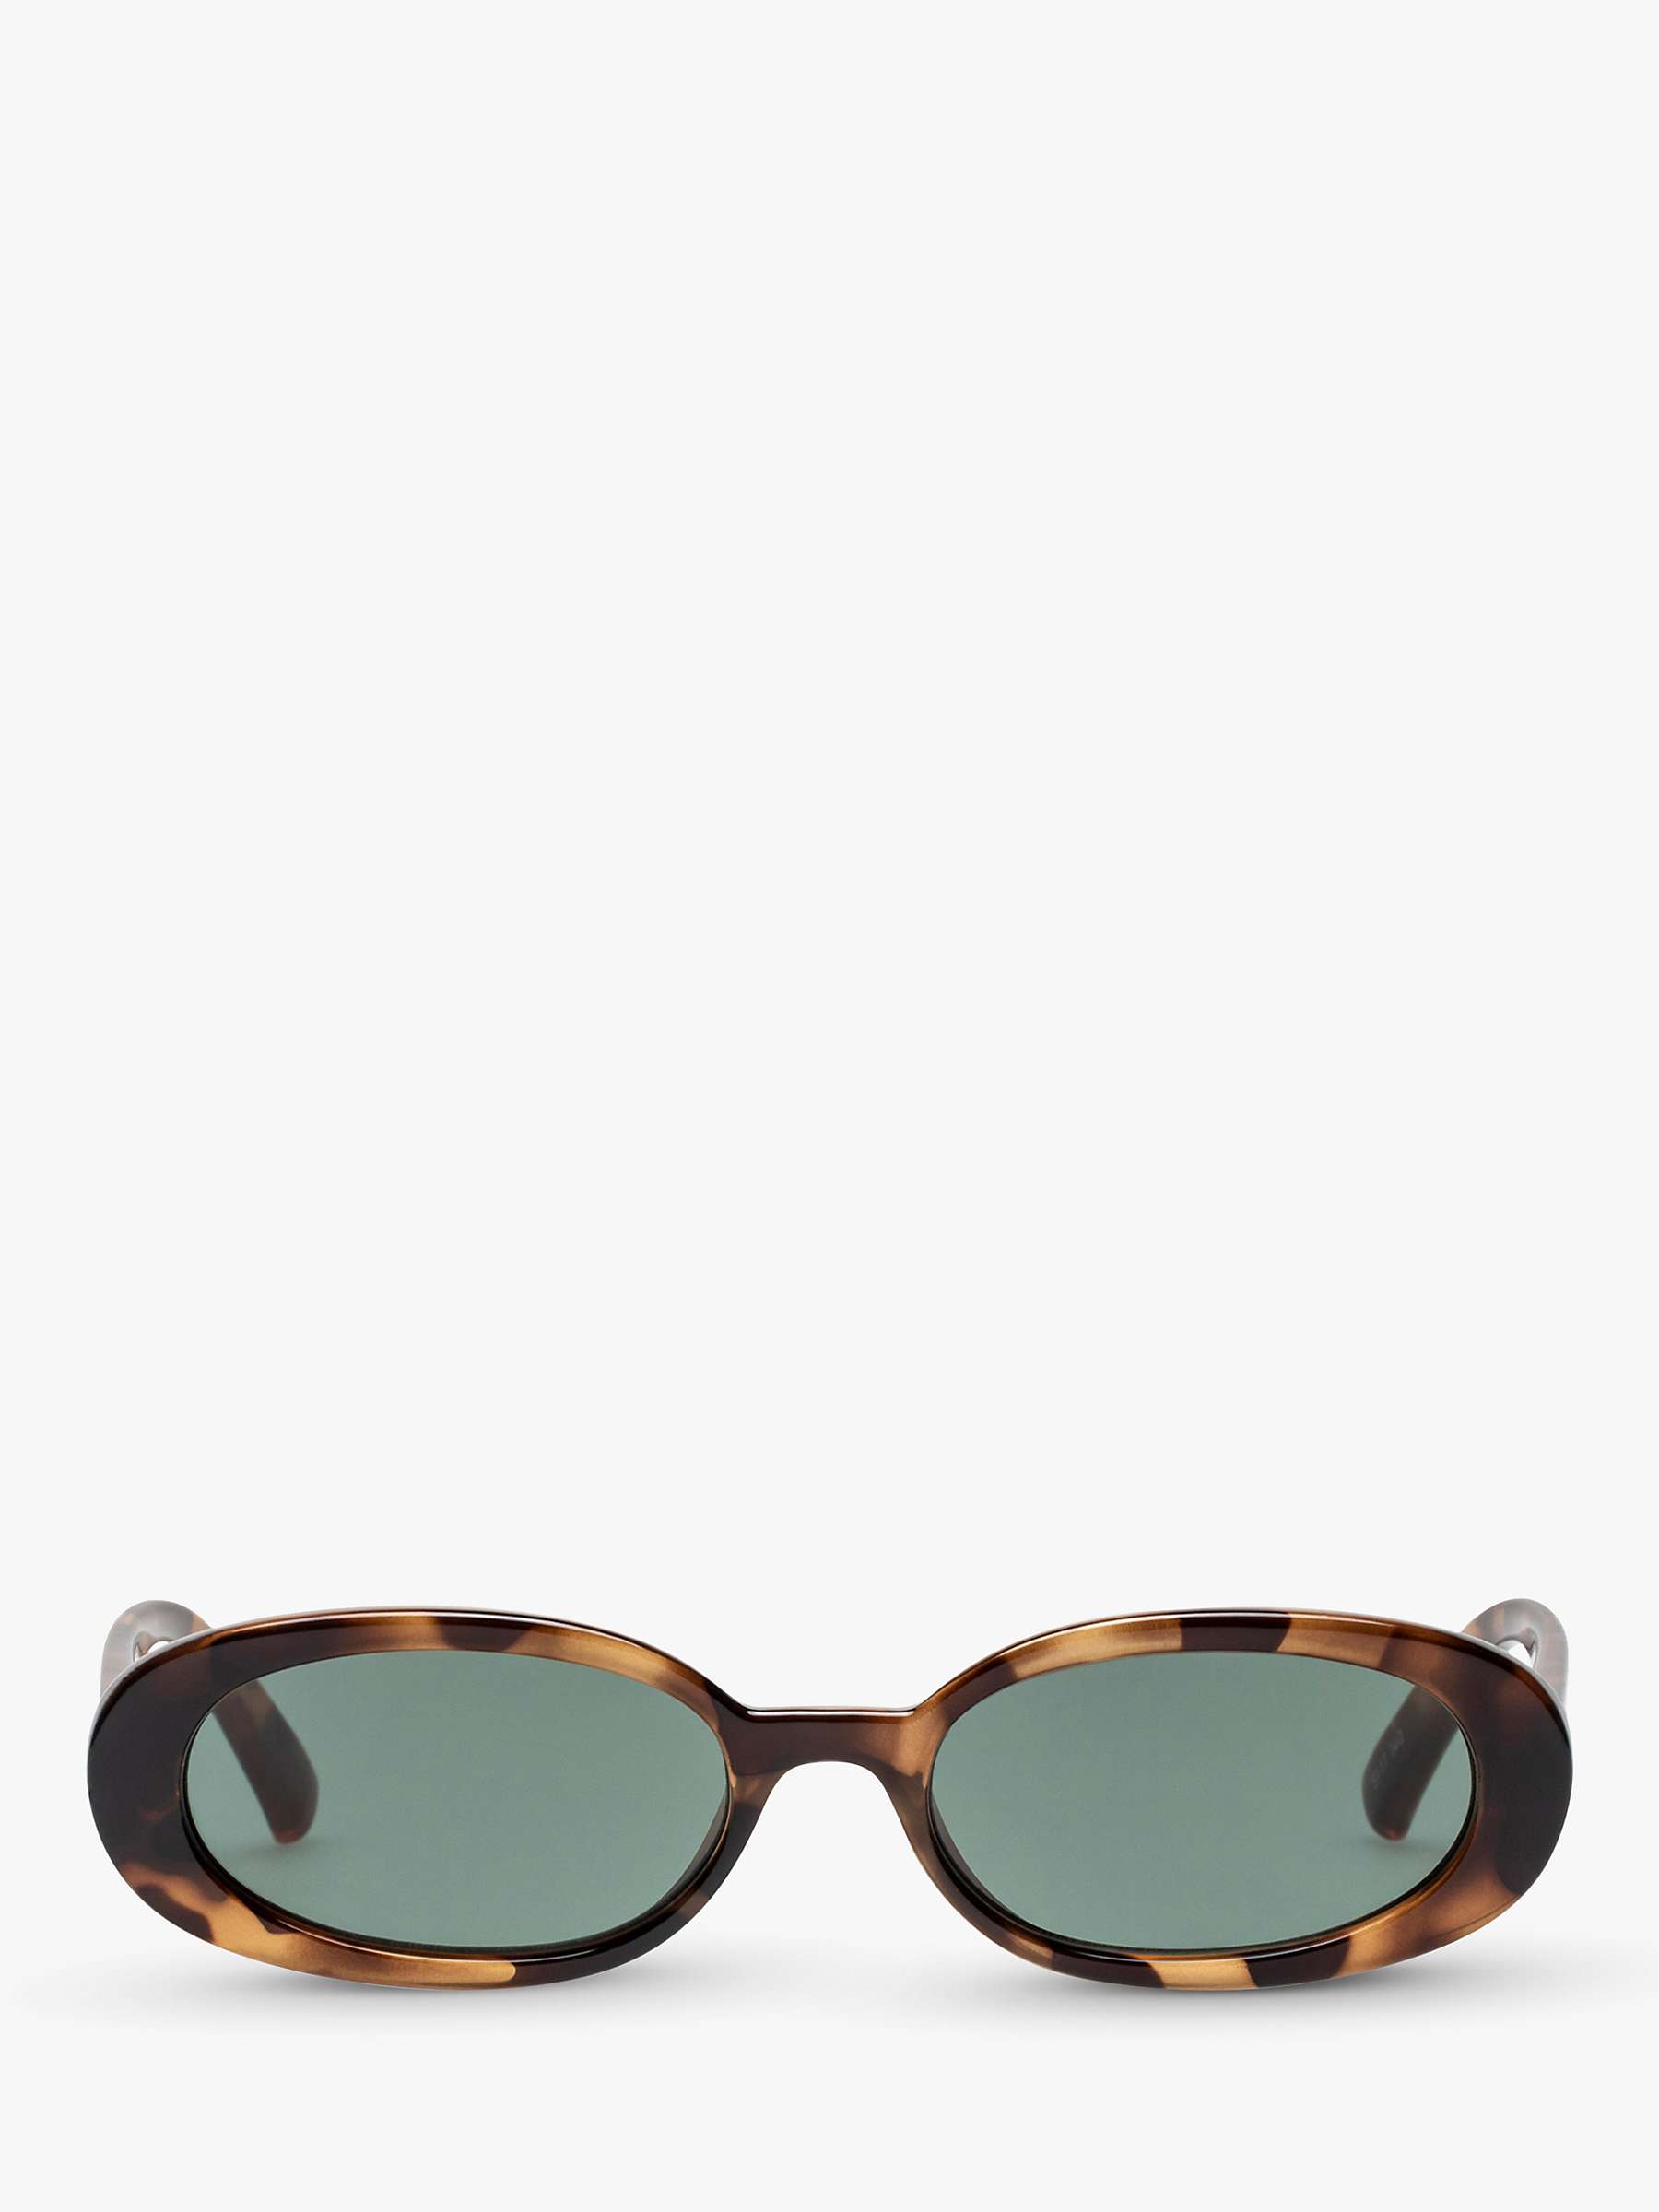 Buy Le Specs Women's Outta Love Oval Sunglasses, Tortoise Online at johnlewis.com